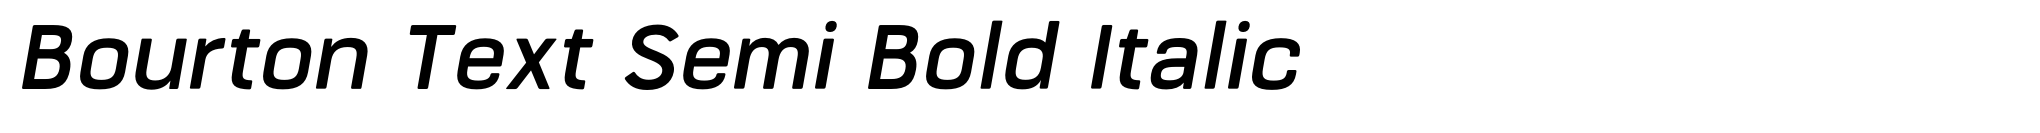 Bourton Text Semi Bold Italic image